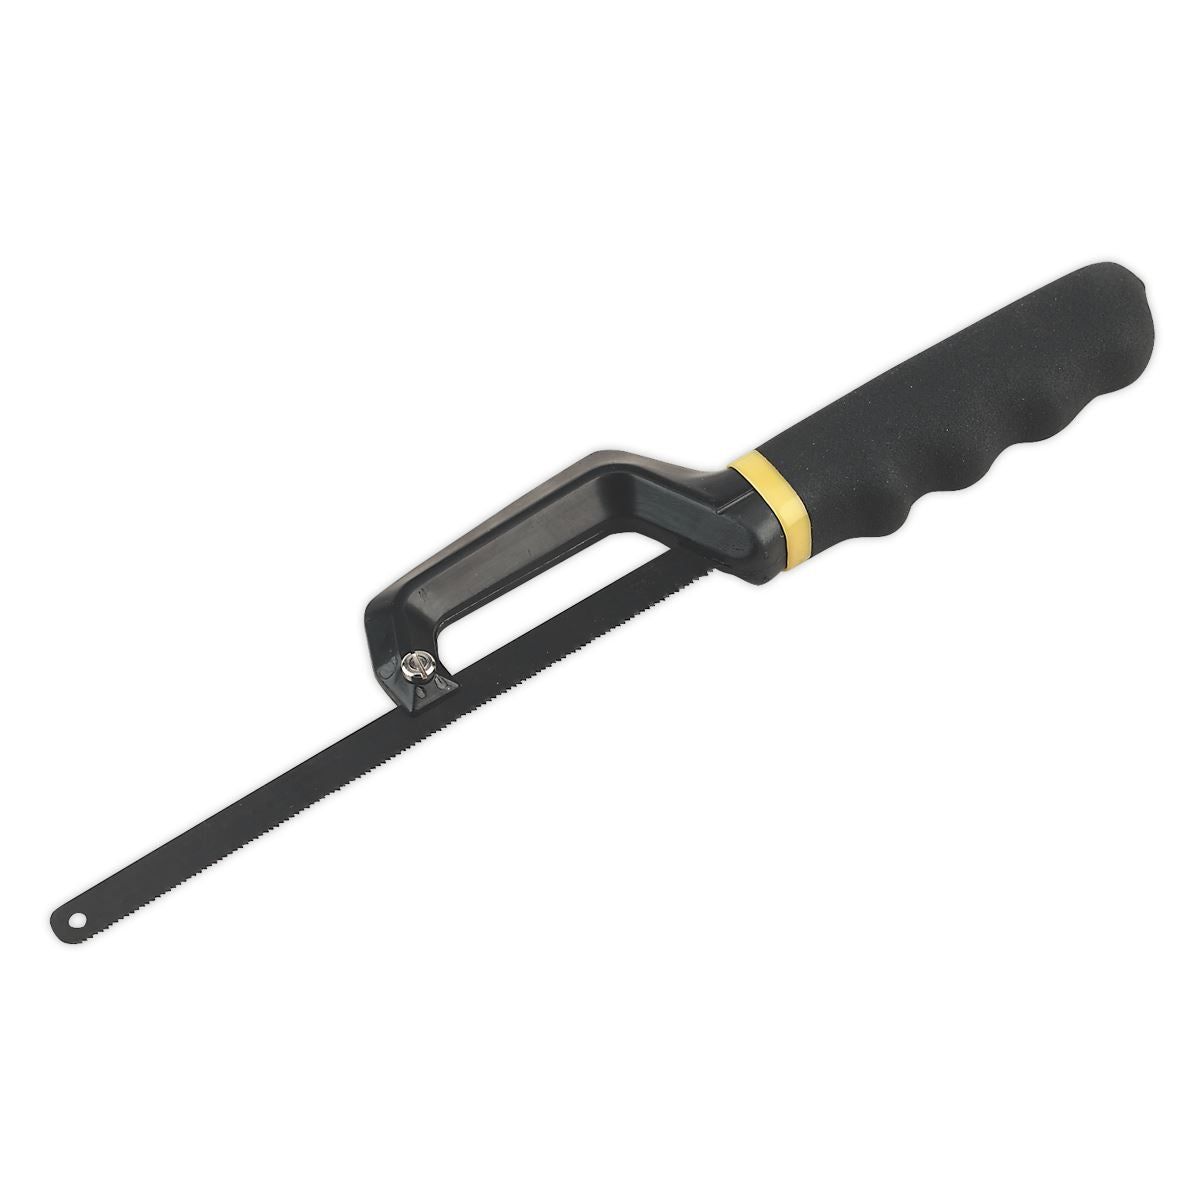 Sealey Premier Mini Hacksaw with Bi-Metal Blade